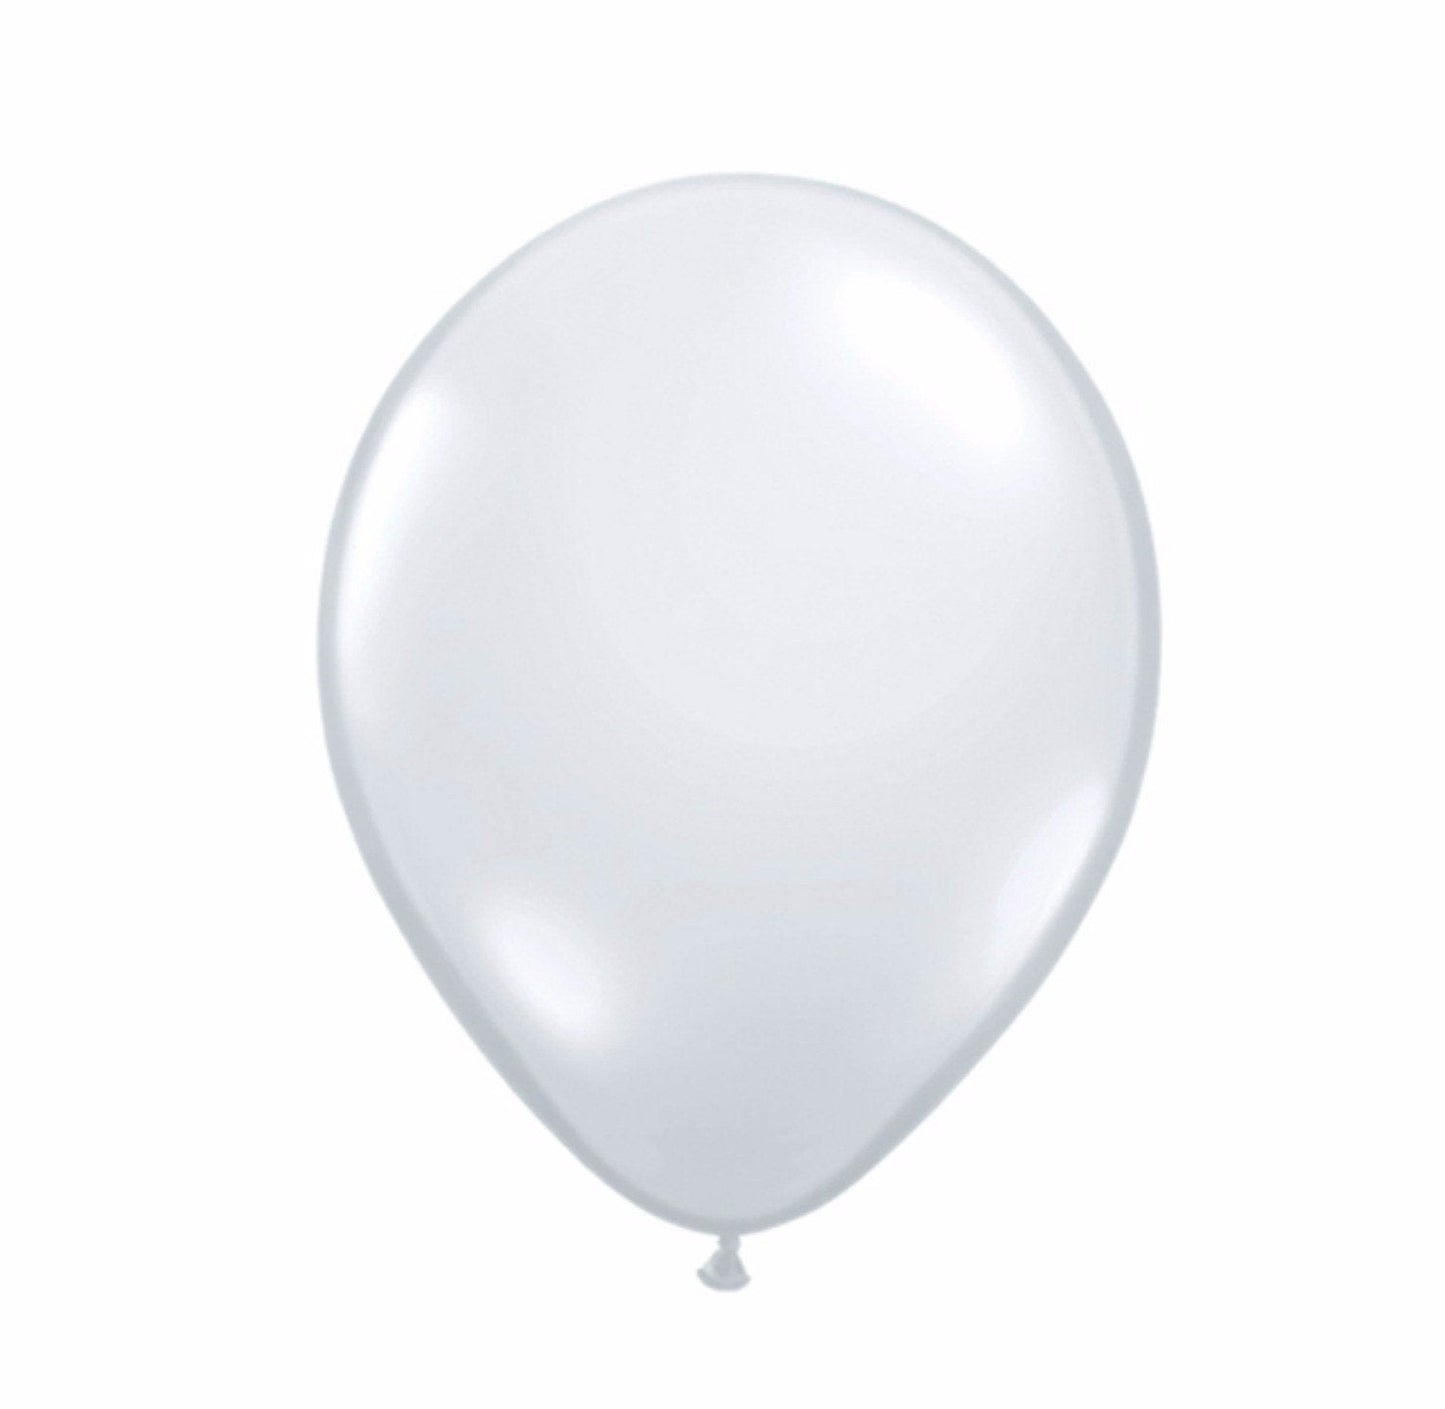 Clear Balloons | Diamond Clear transparent Balloons UK Qualatex